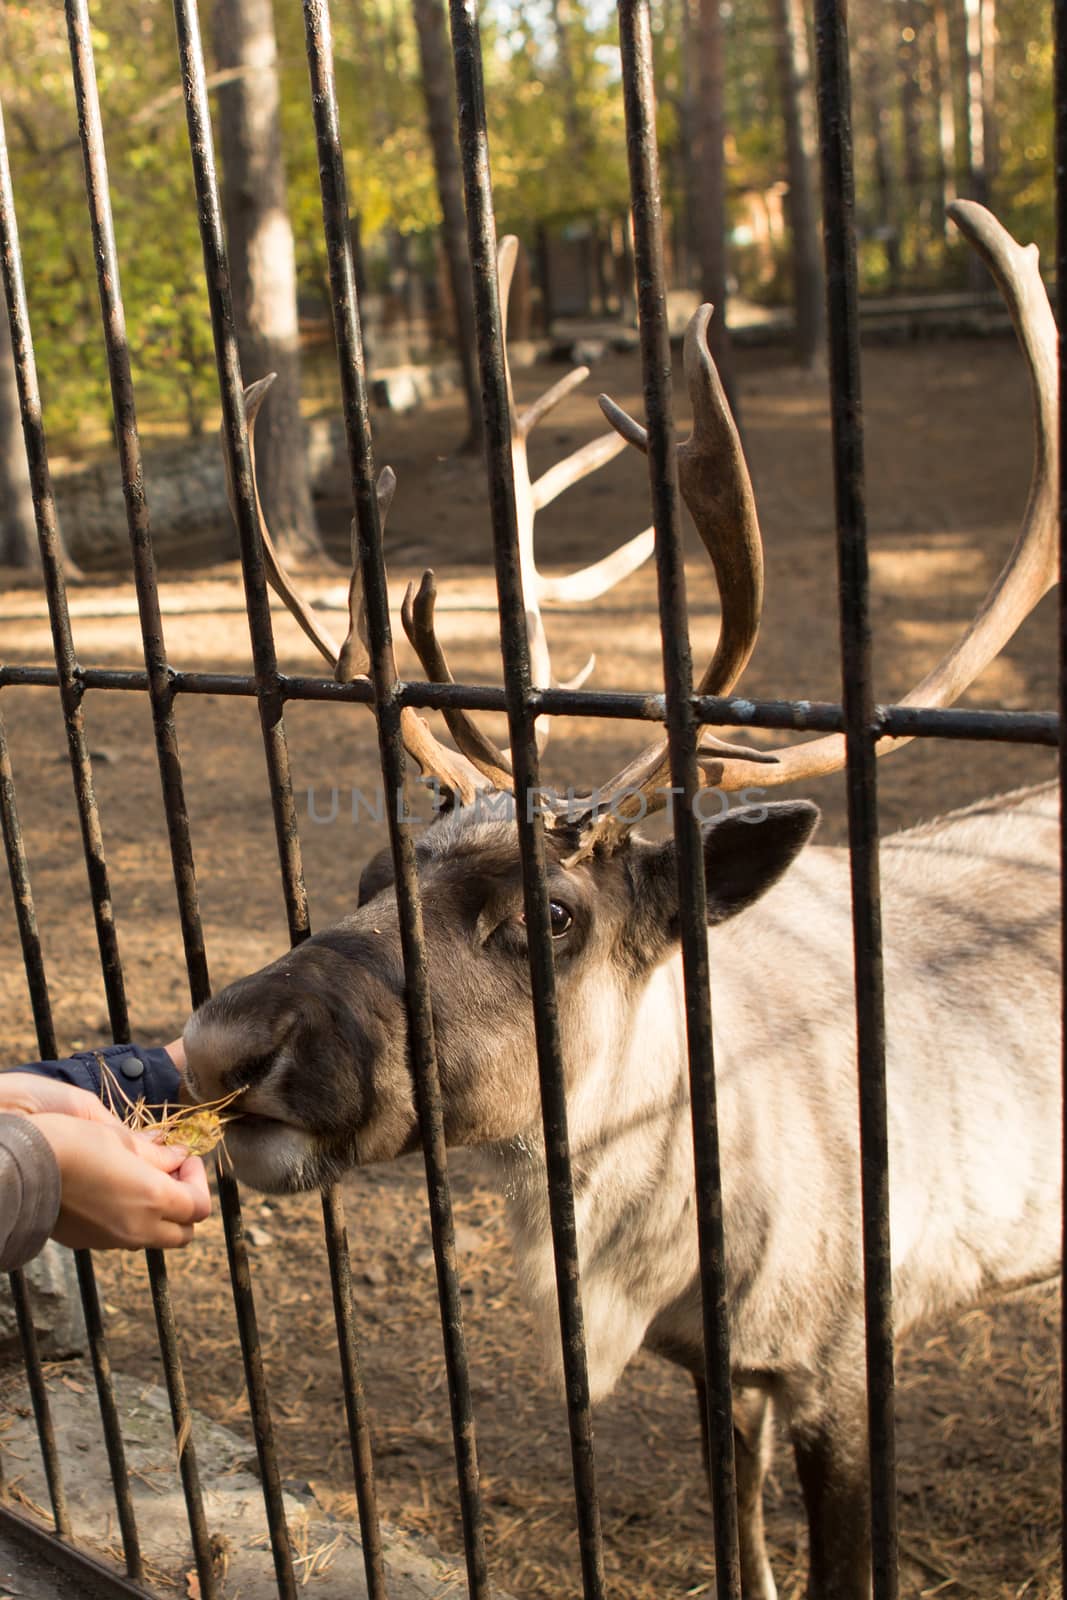 feeding deer at the zoo through the bars